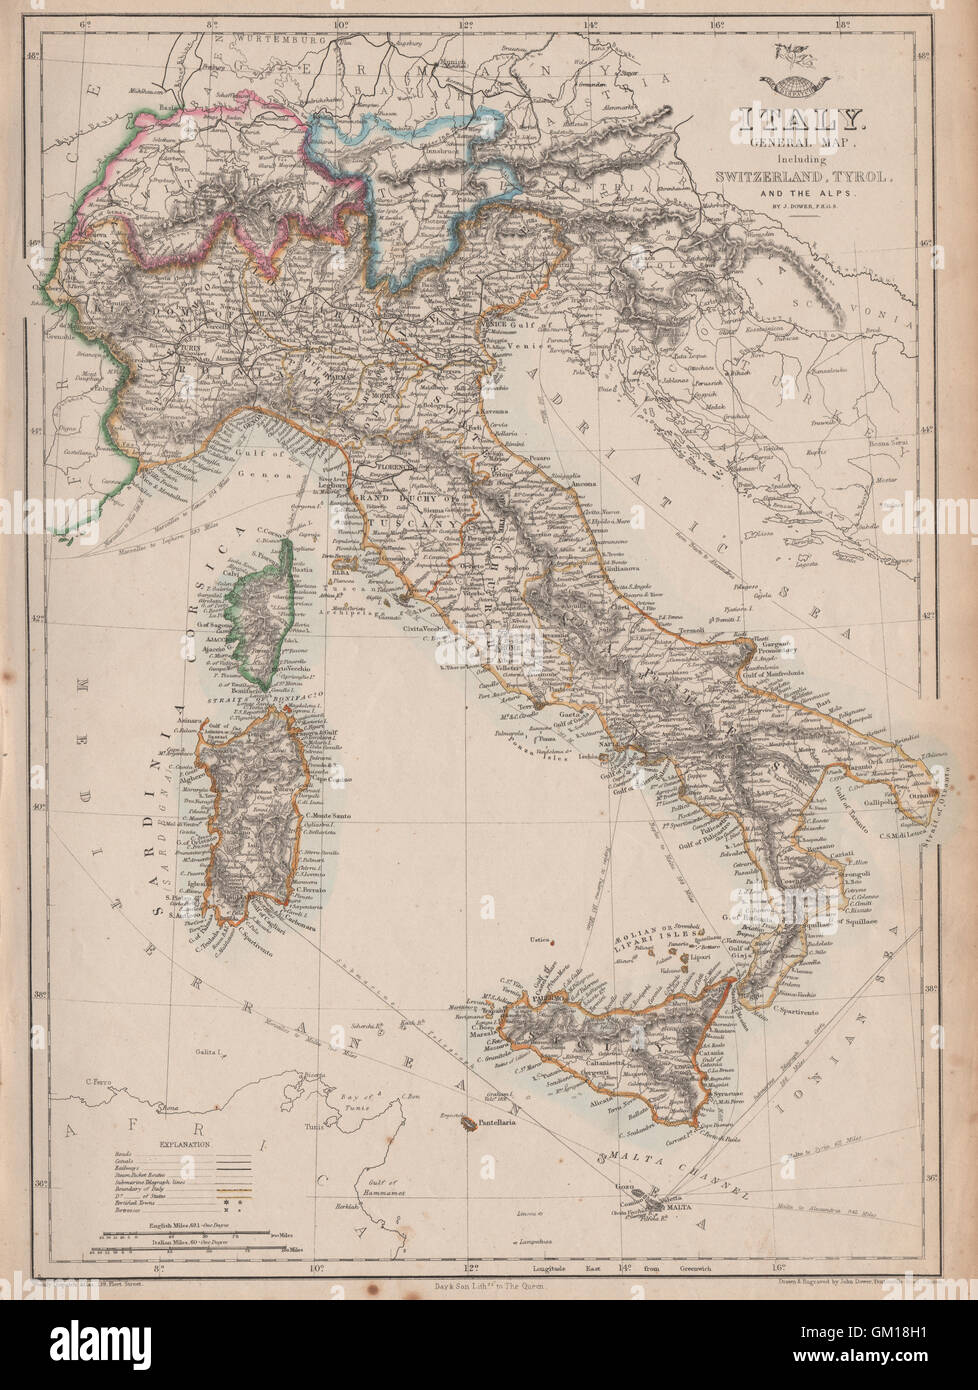 ITALY SWITZERLAND TYROL ALPS. Italian unification.DOWER.Dispatch atlas, 1863 map Stock Photo